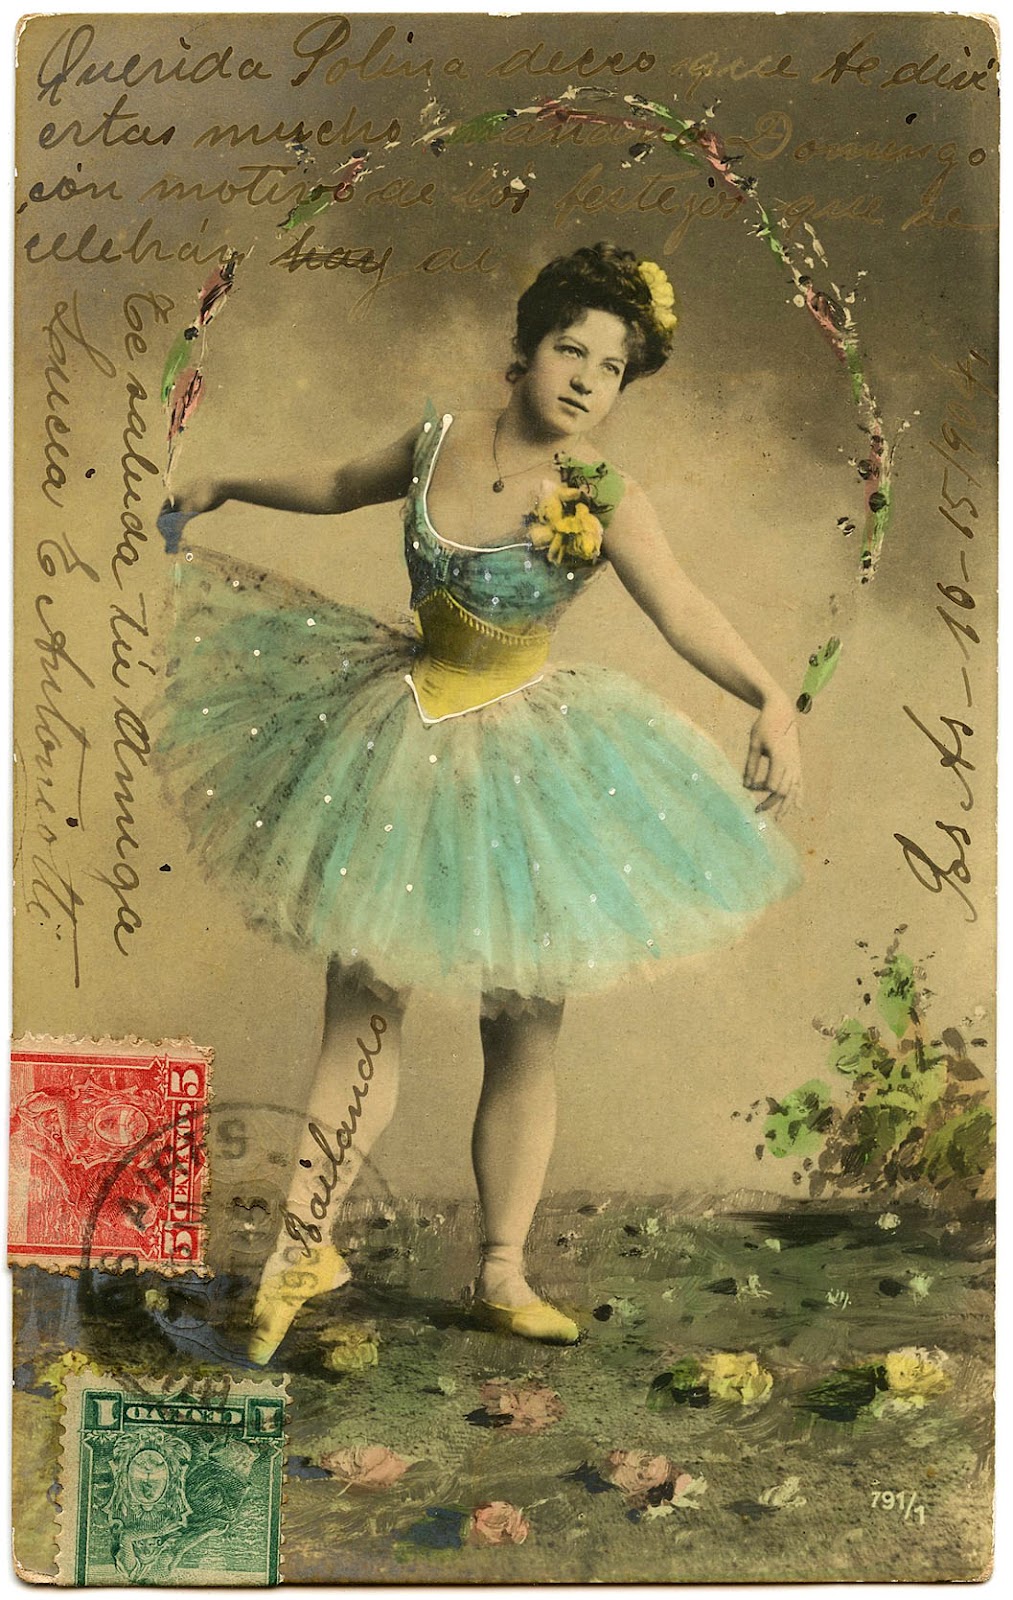 Old Photo - Pretty Ballerina with Aqua Tutu - The Graphics Fairy